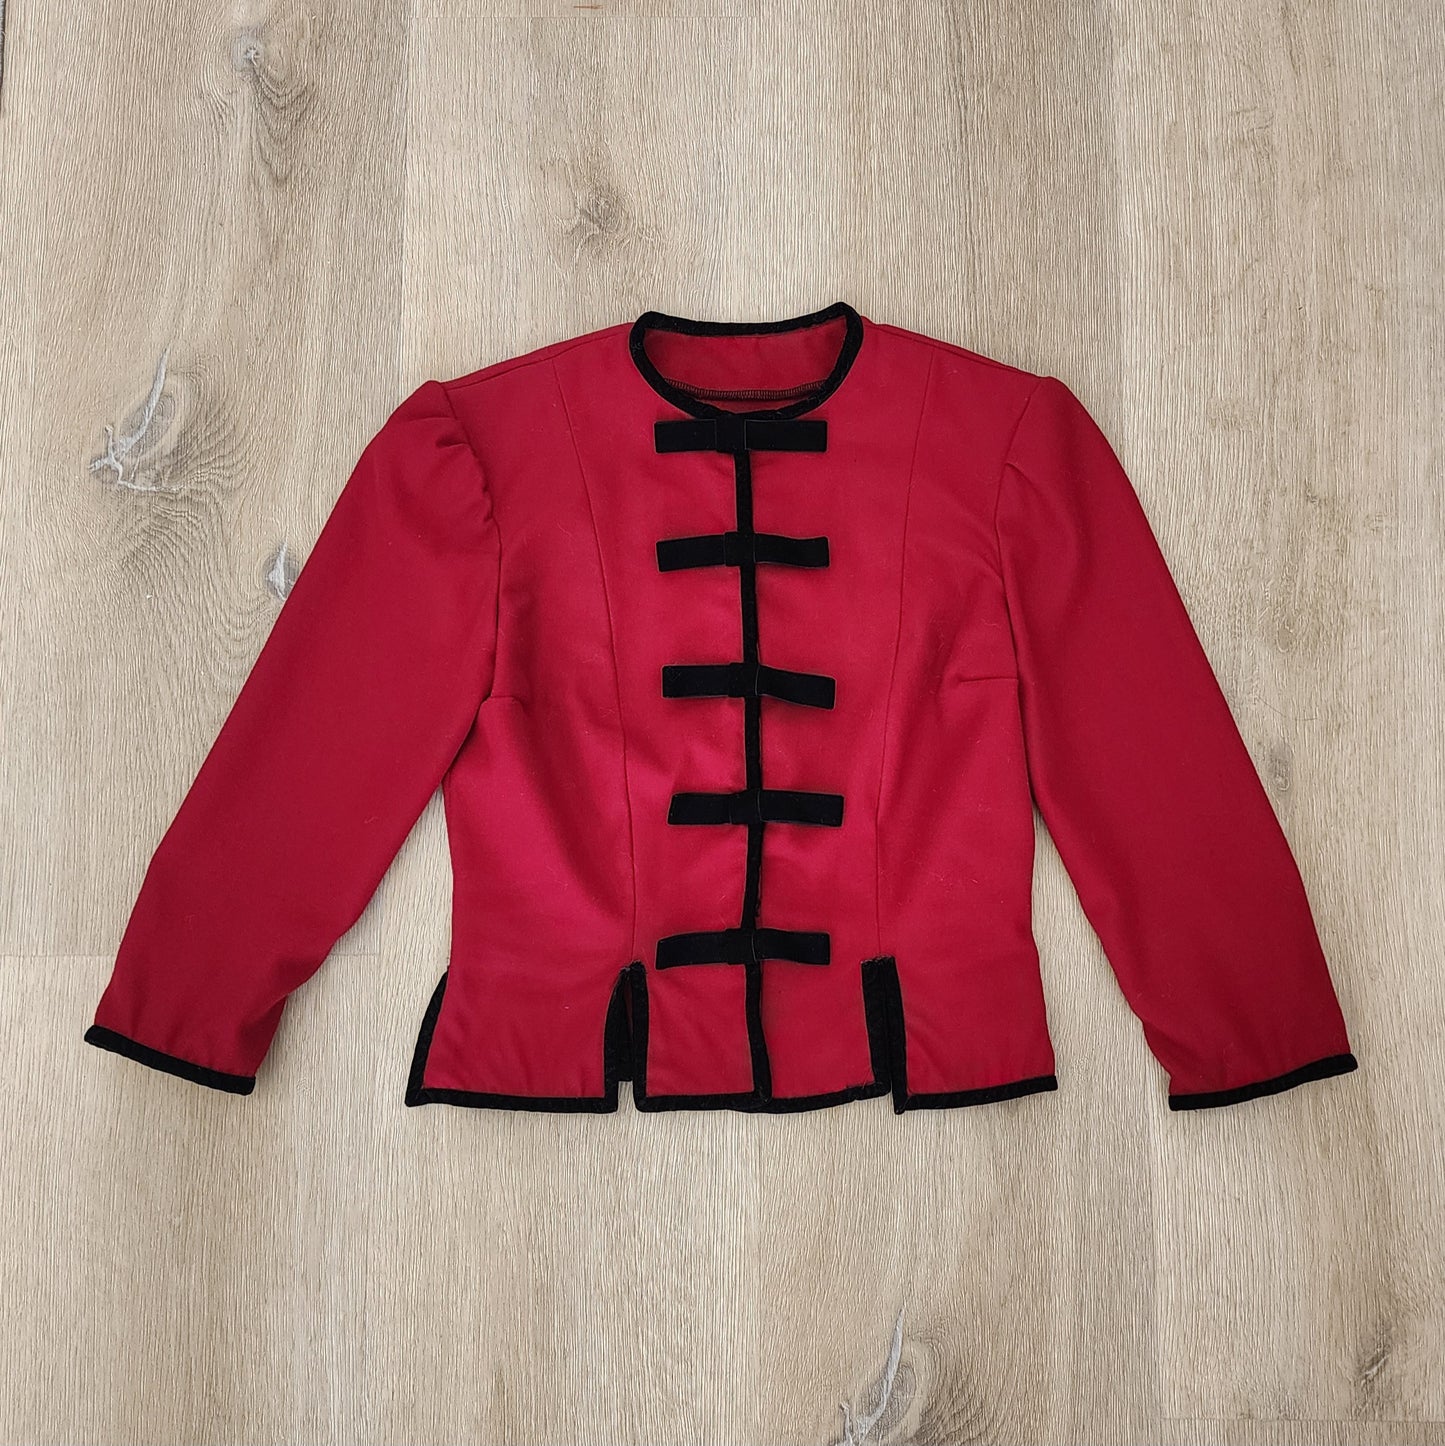 Vintage inspired red blazer with black velvet bows, size Small